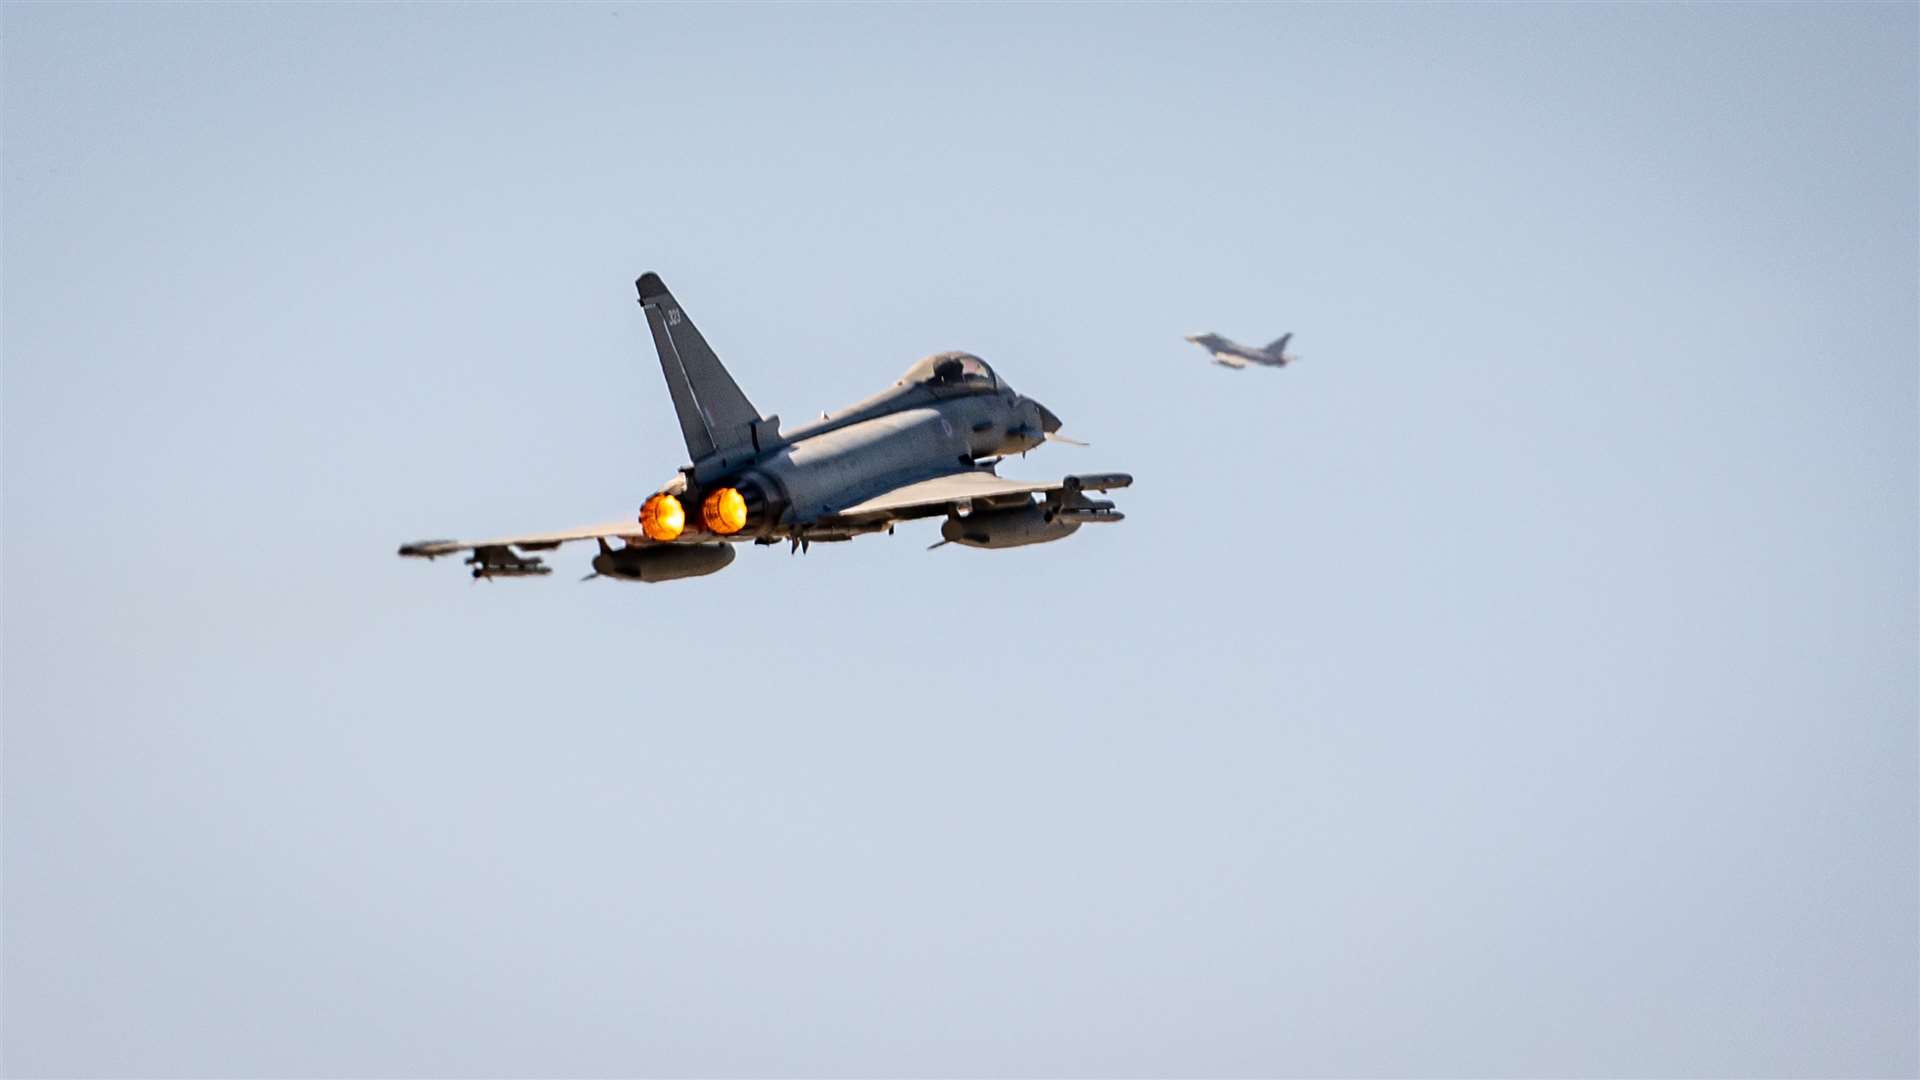 An RAF Eurofighter Typhoon taking off to intercept the Russian jet.